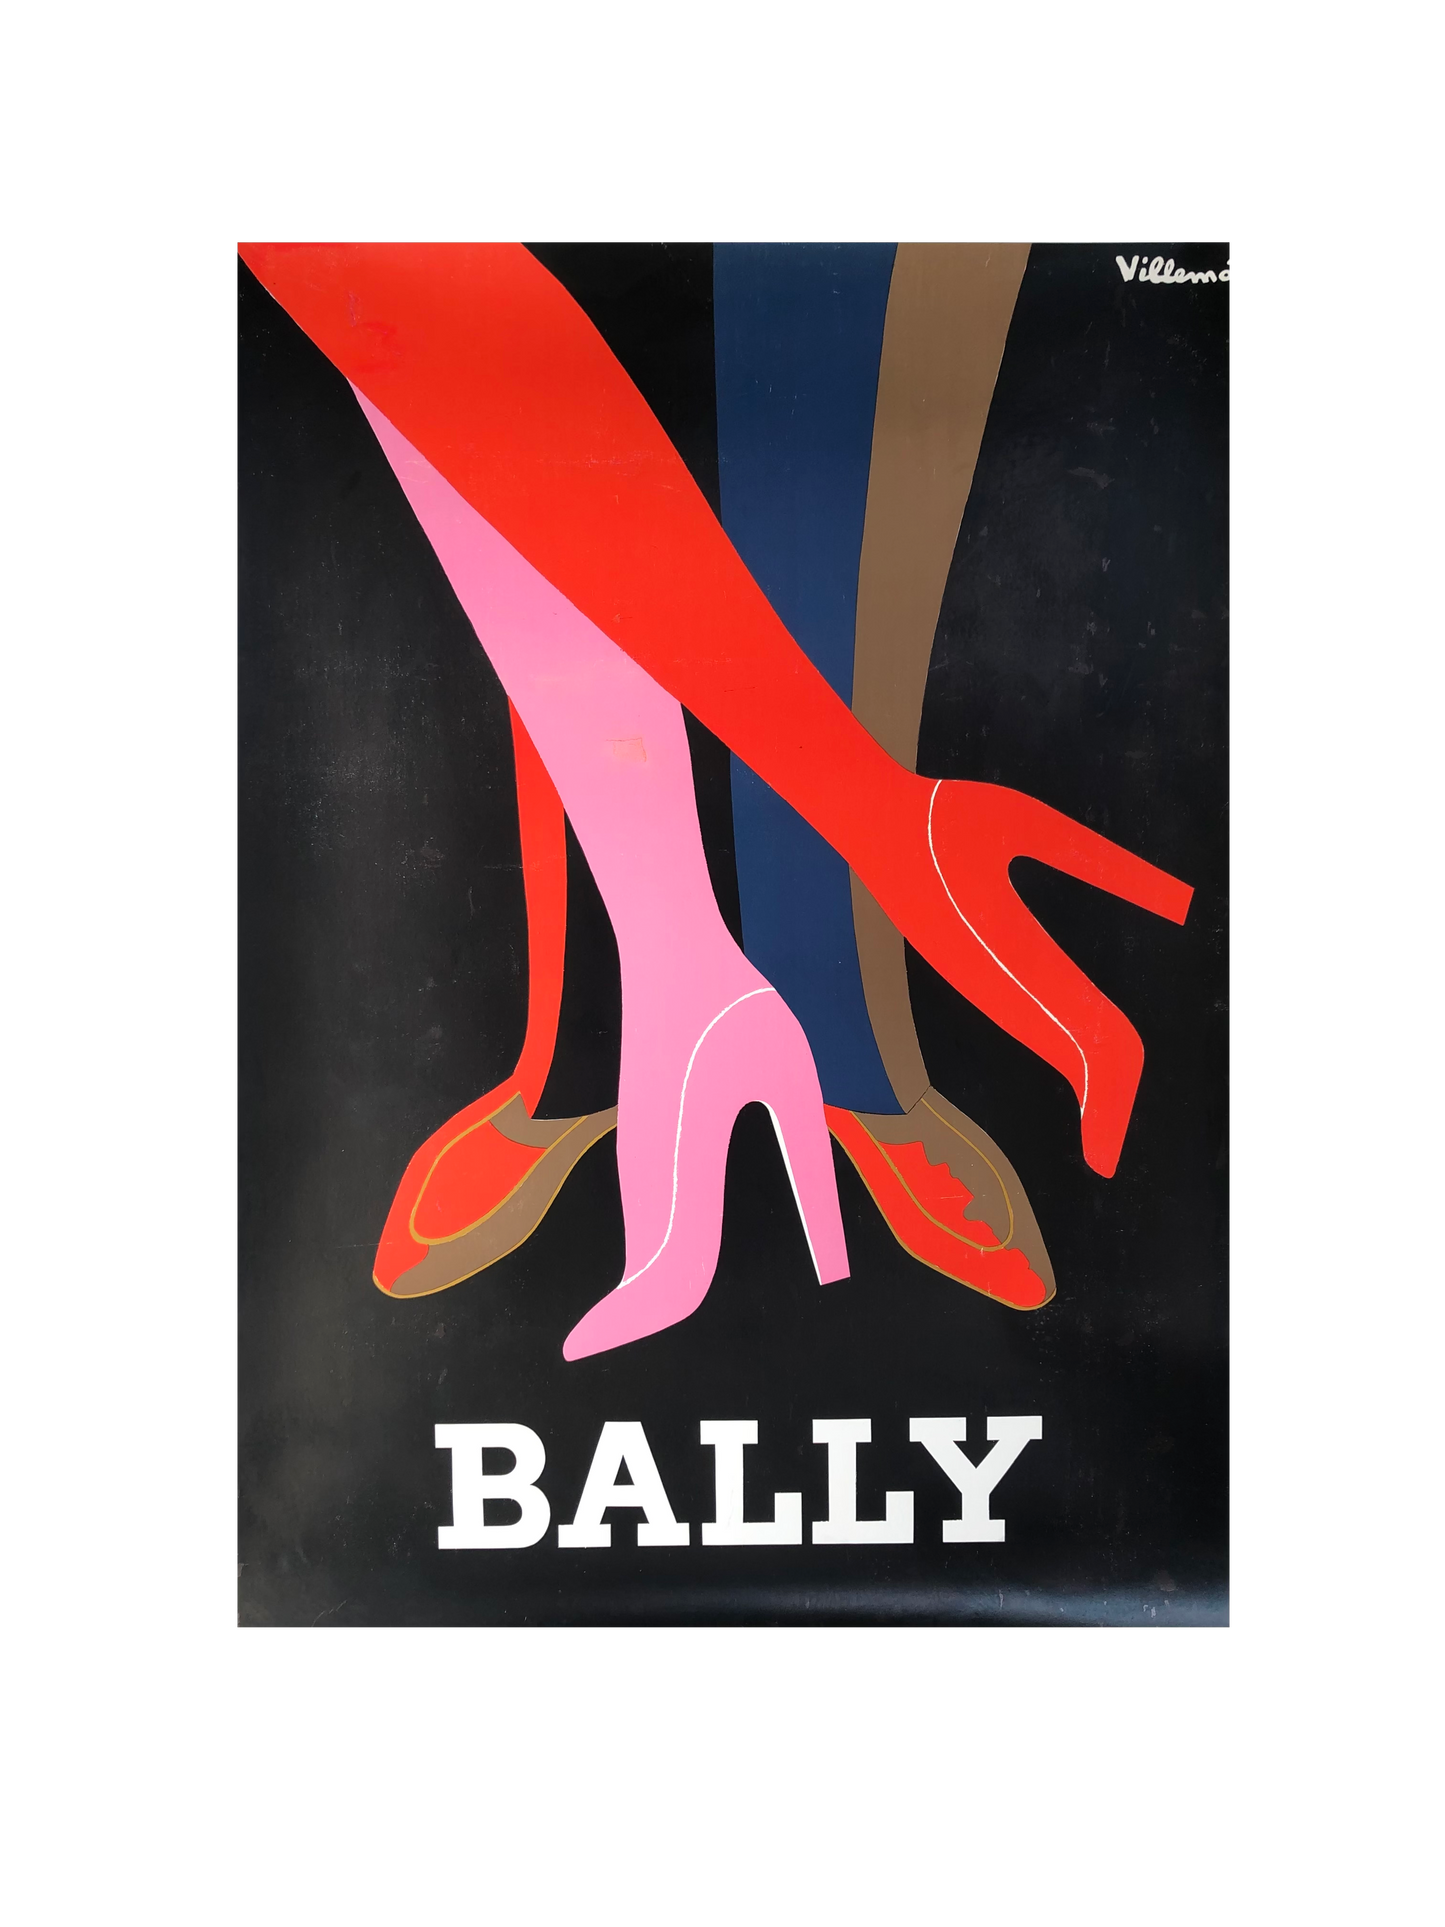 Bally Tango by Villemot